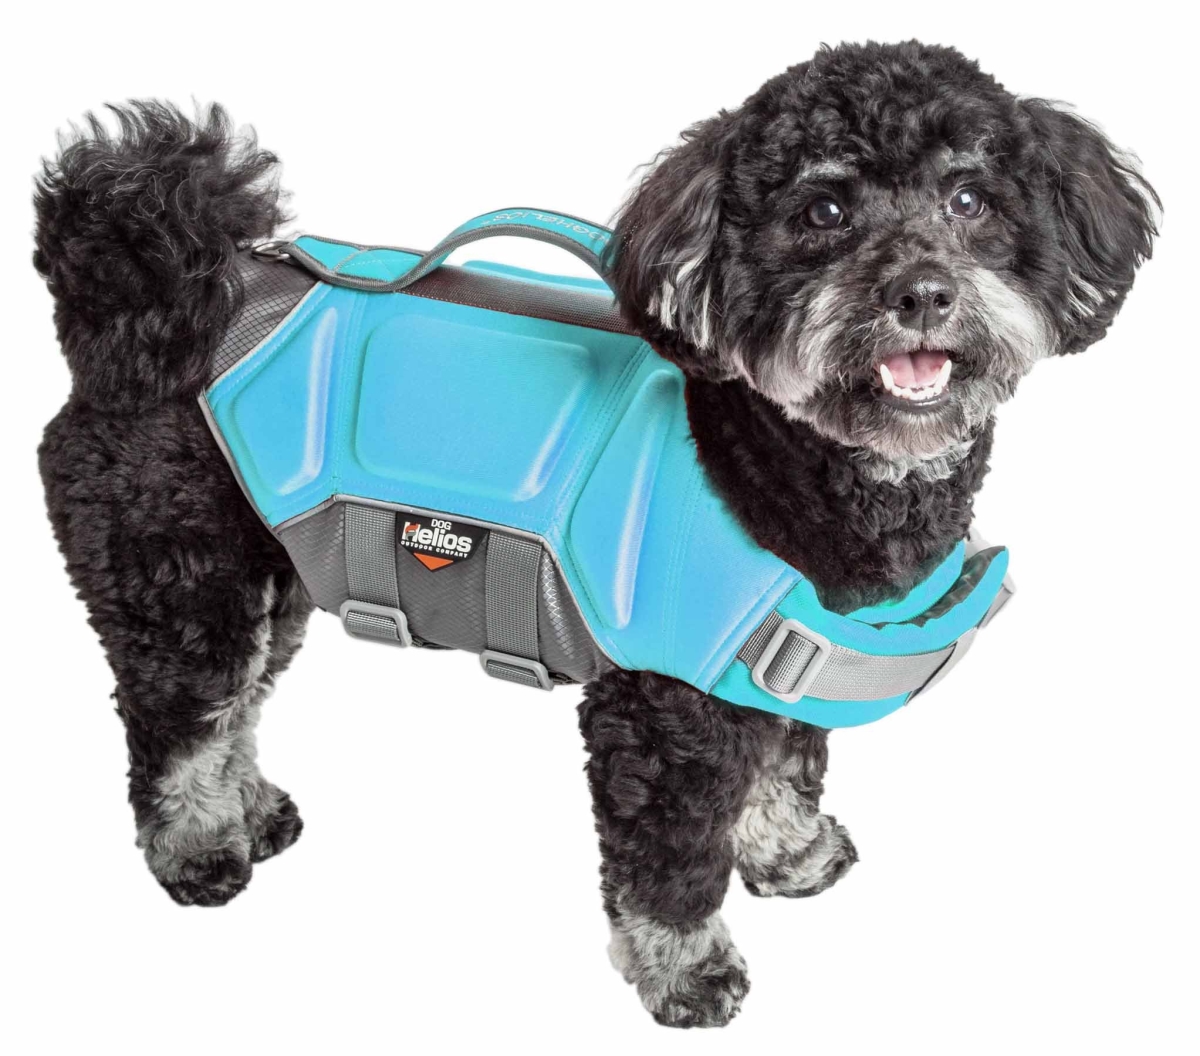 Picture of Dog Helios HA18LBMD Tidal Guard Multi-Point Strategically-Stitched Reflective Pet Dog Life Jacket Vest - Light Blue, Medium